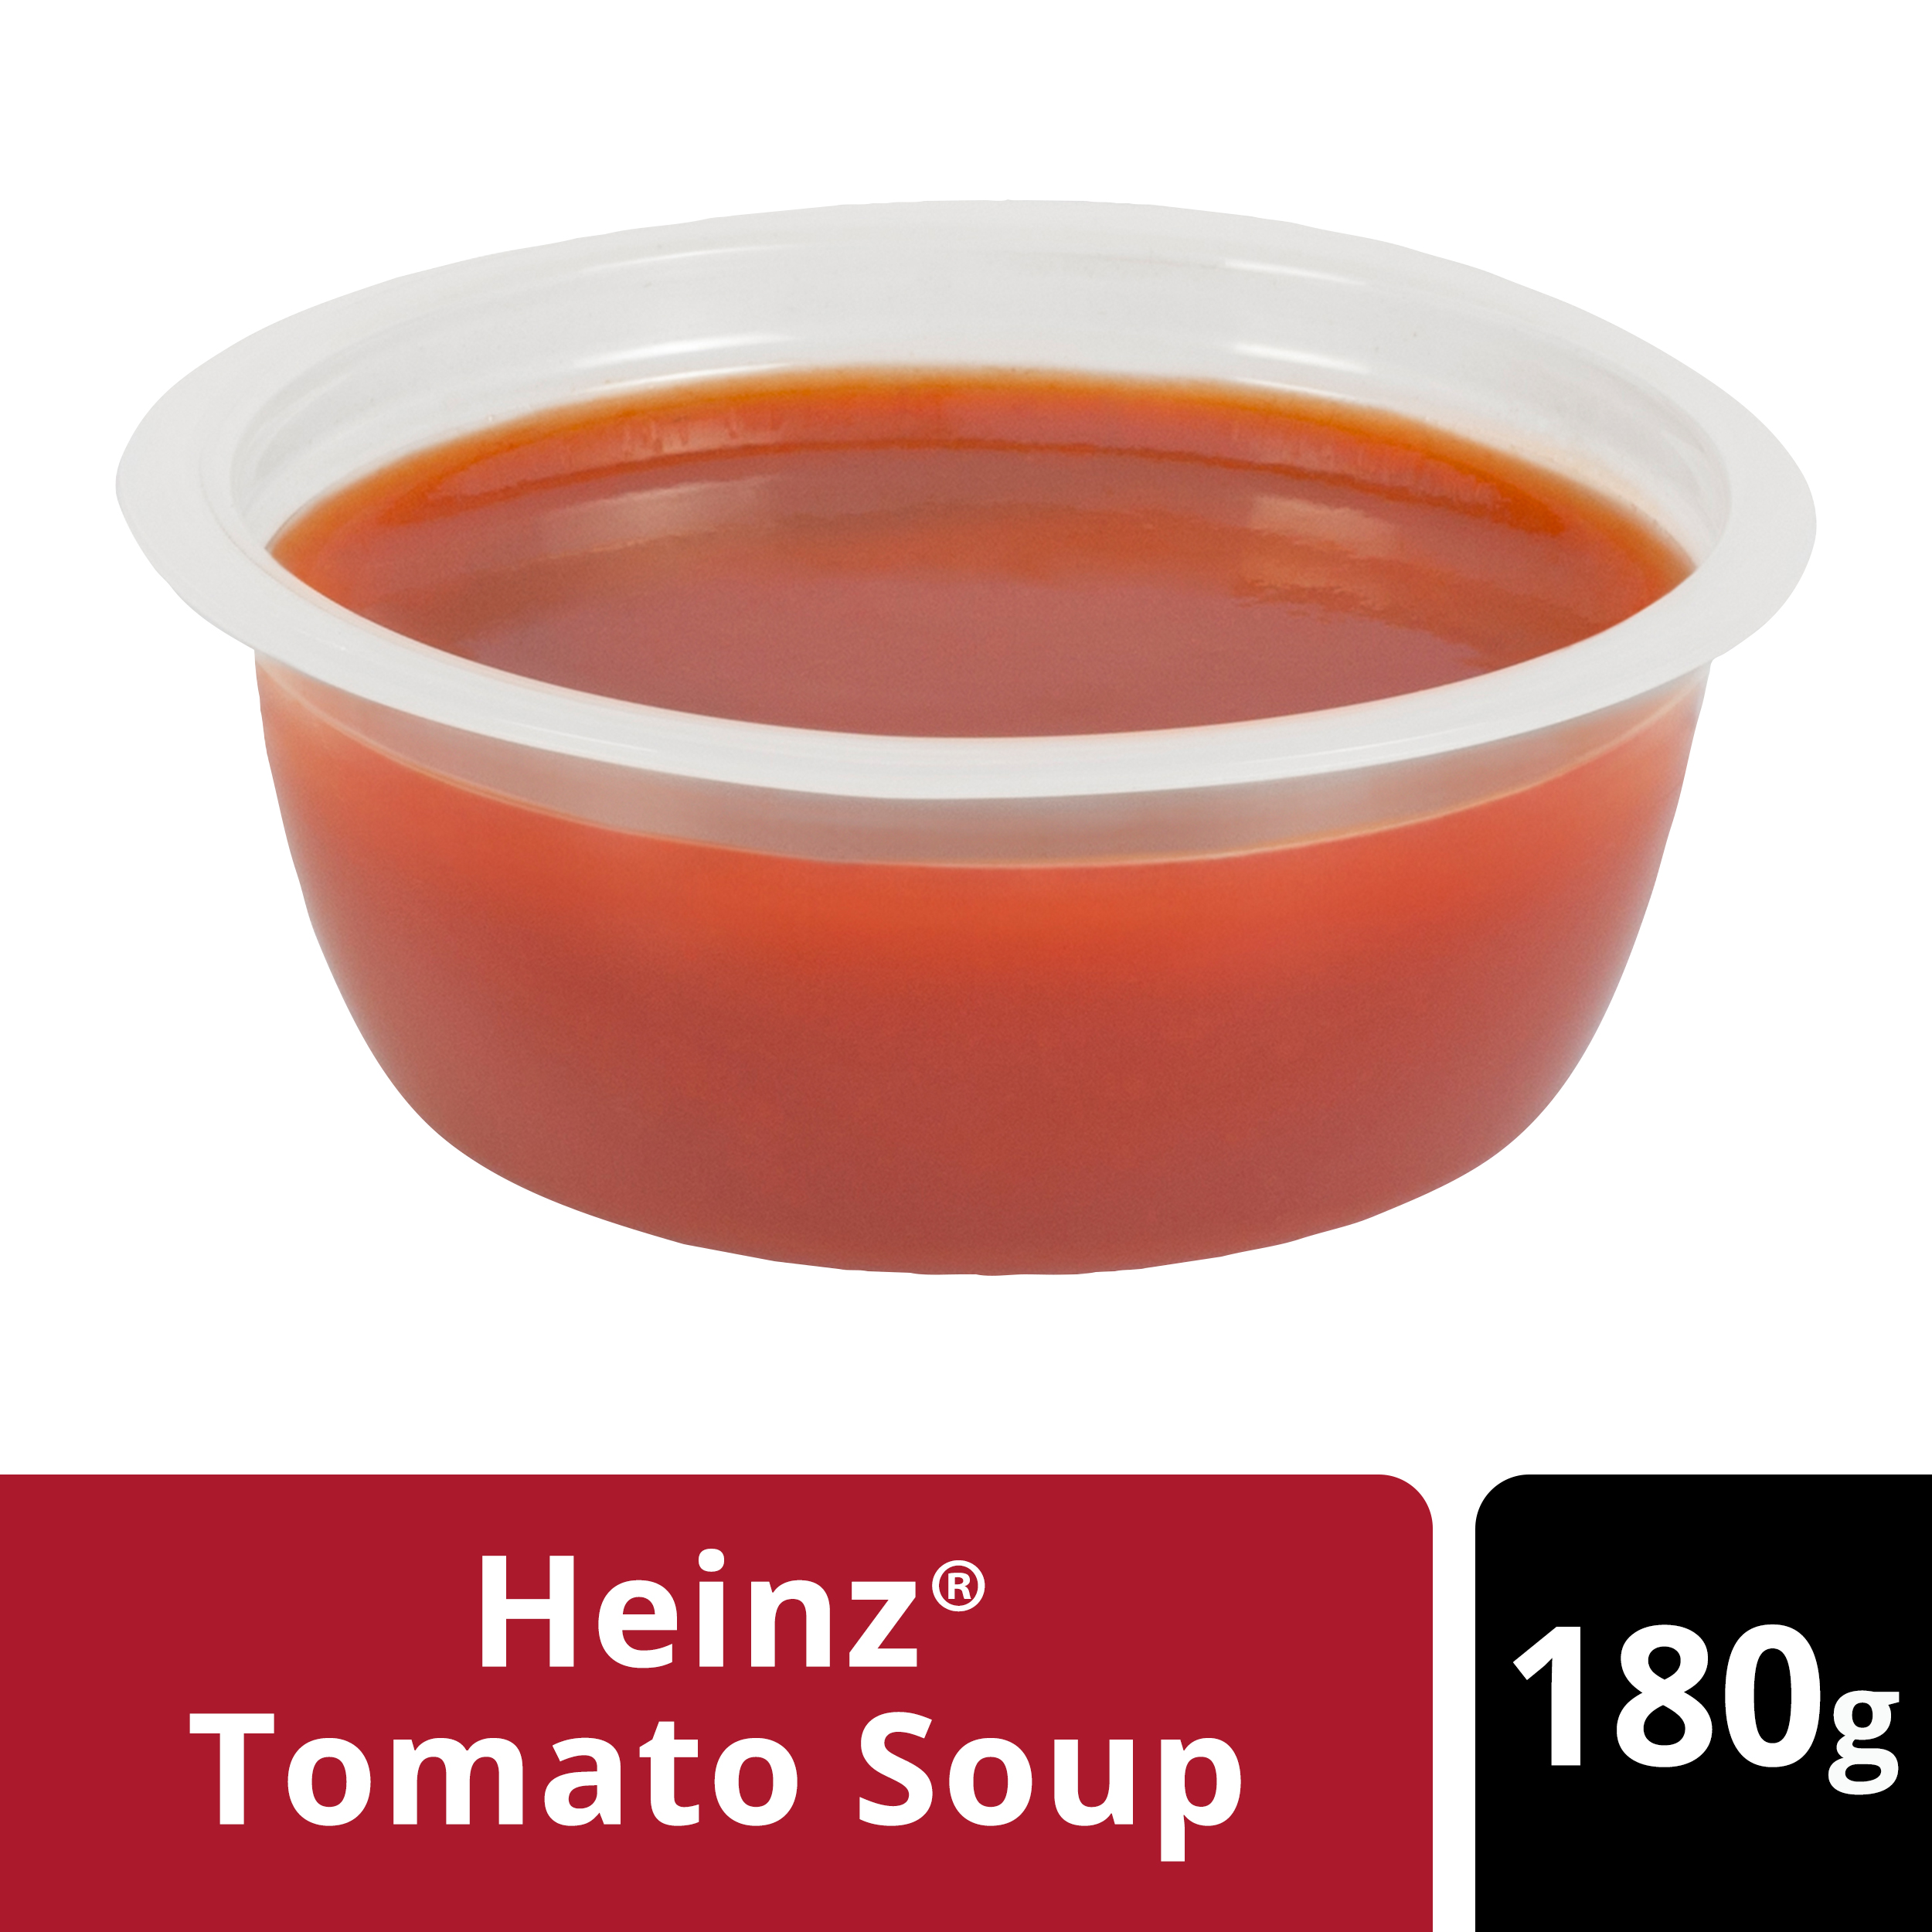  Heinz® Tomato Soup Portion 180g 